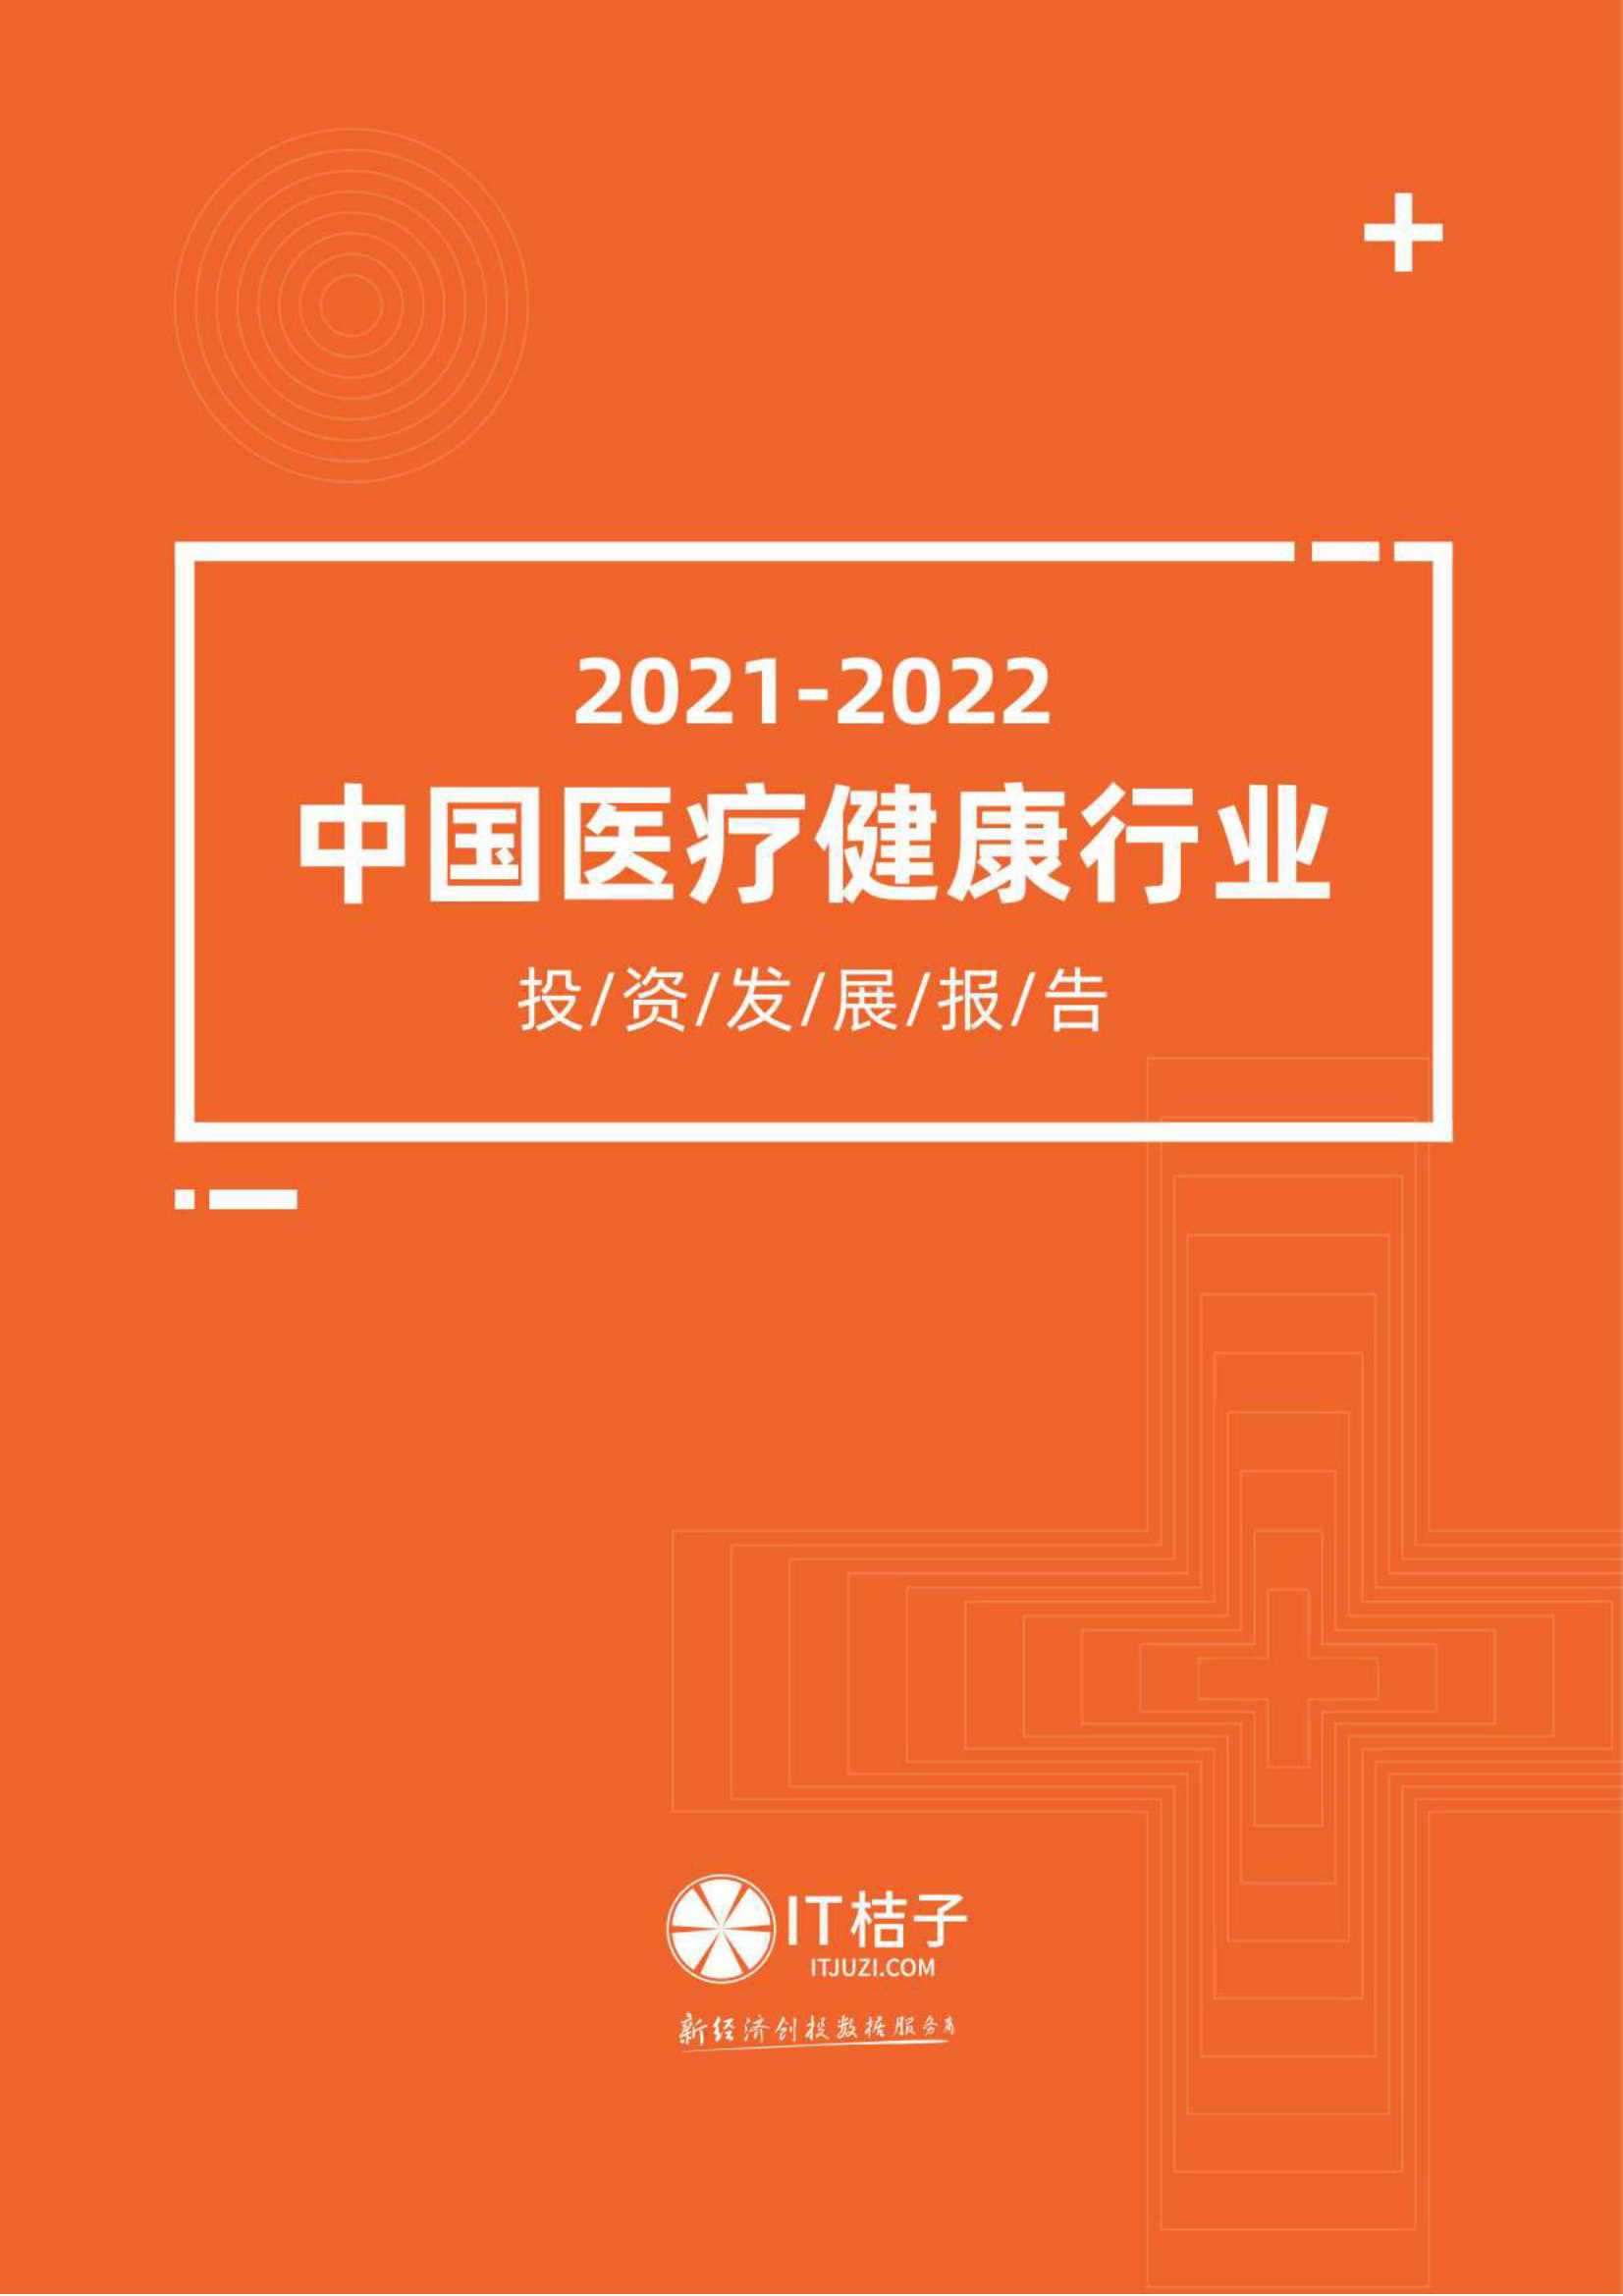 IT桔子-2021-2022年中国医疗健康行业投资发展报告 -2022.03-48页